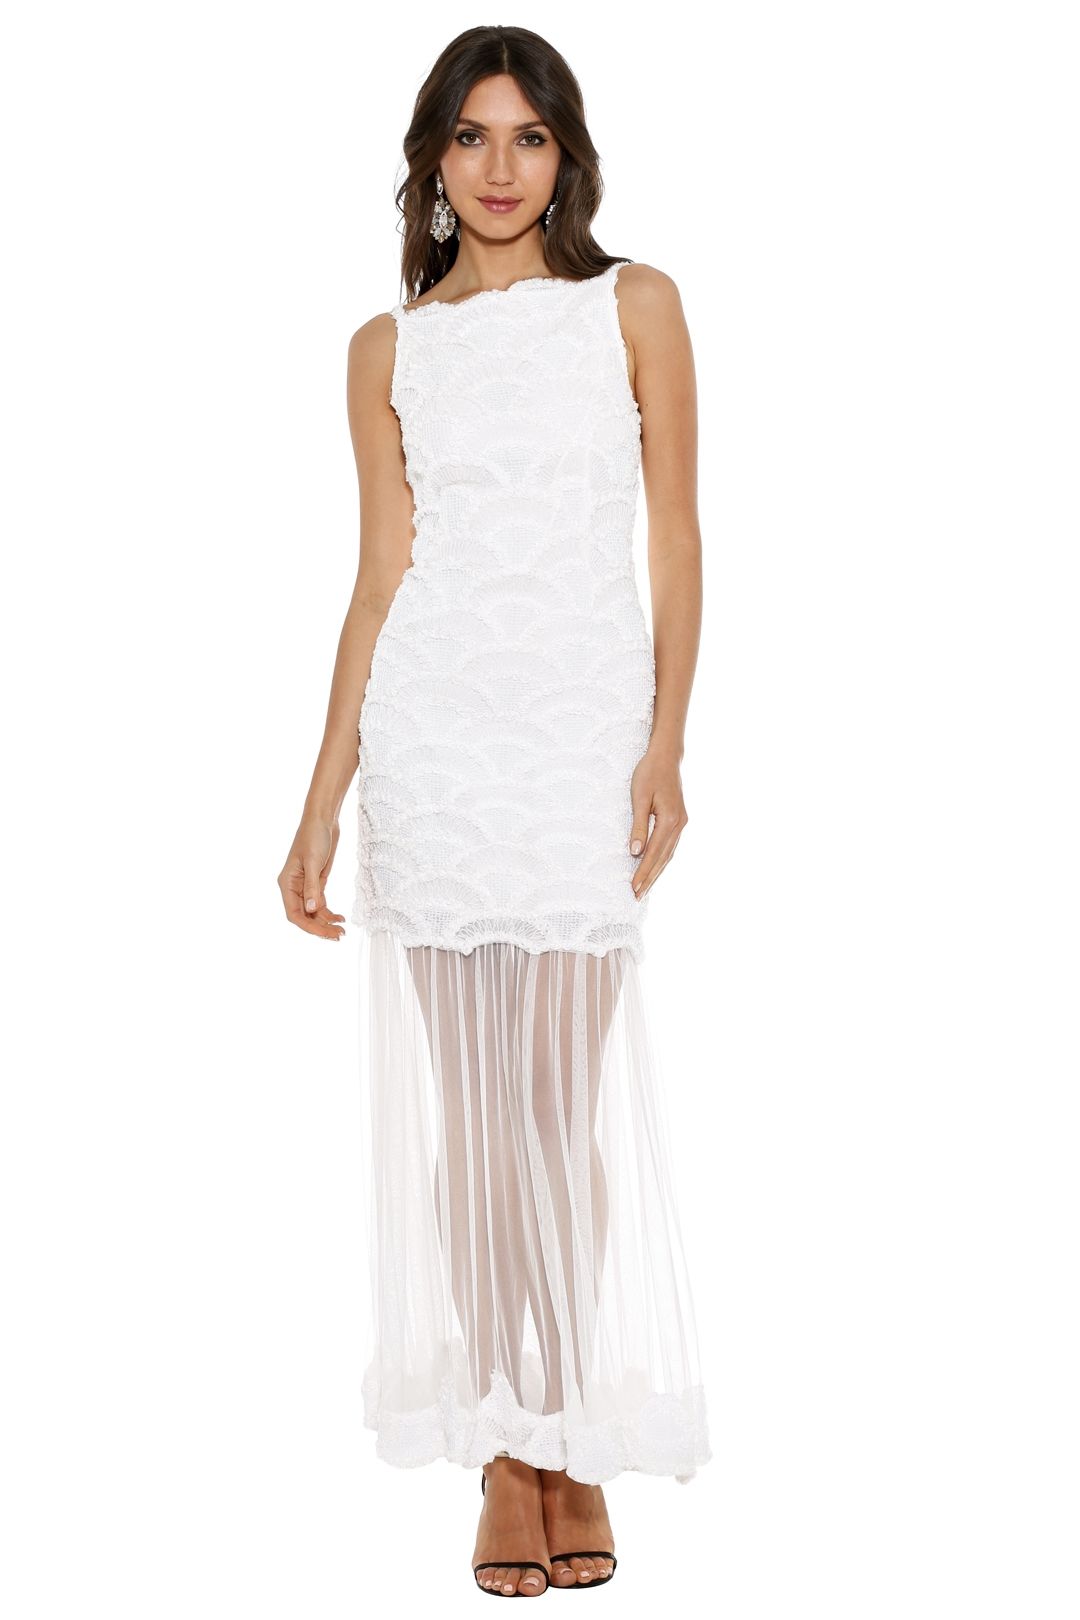 Asilio - An English Summer Dress - White - Front